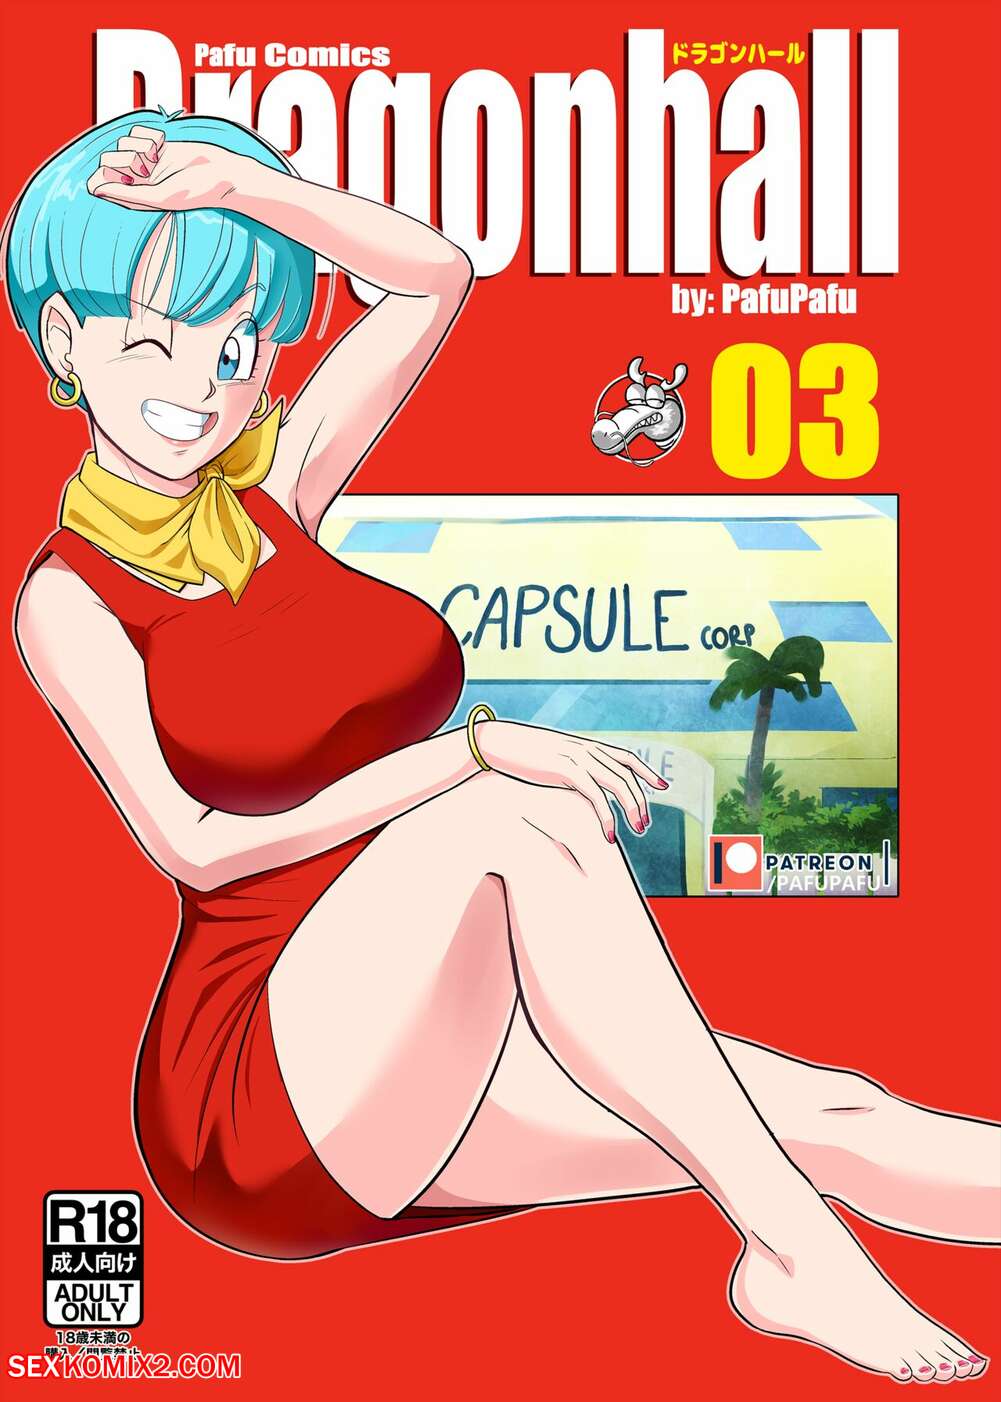 Bulma And Trunks Hentai English - âœ…ï¸ Porn comic Gohan vs Bulma. Dragon Ball Z. PafuPafu Sex comic beauty MILF  was | Porn comics in English for adults only | sexkomix2.com